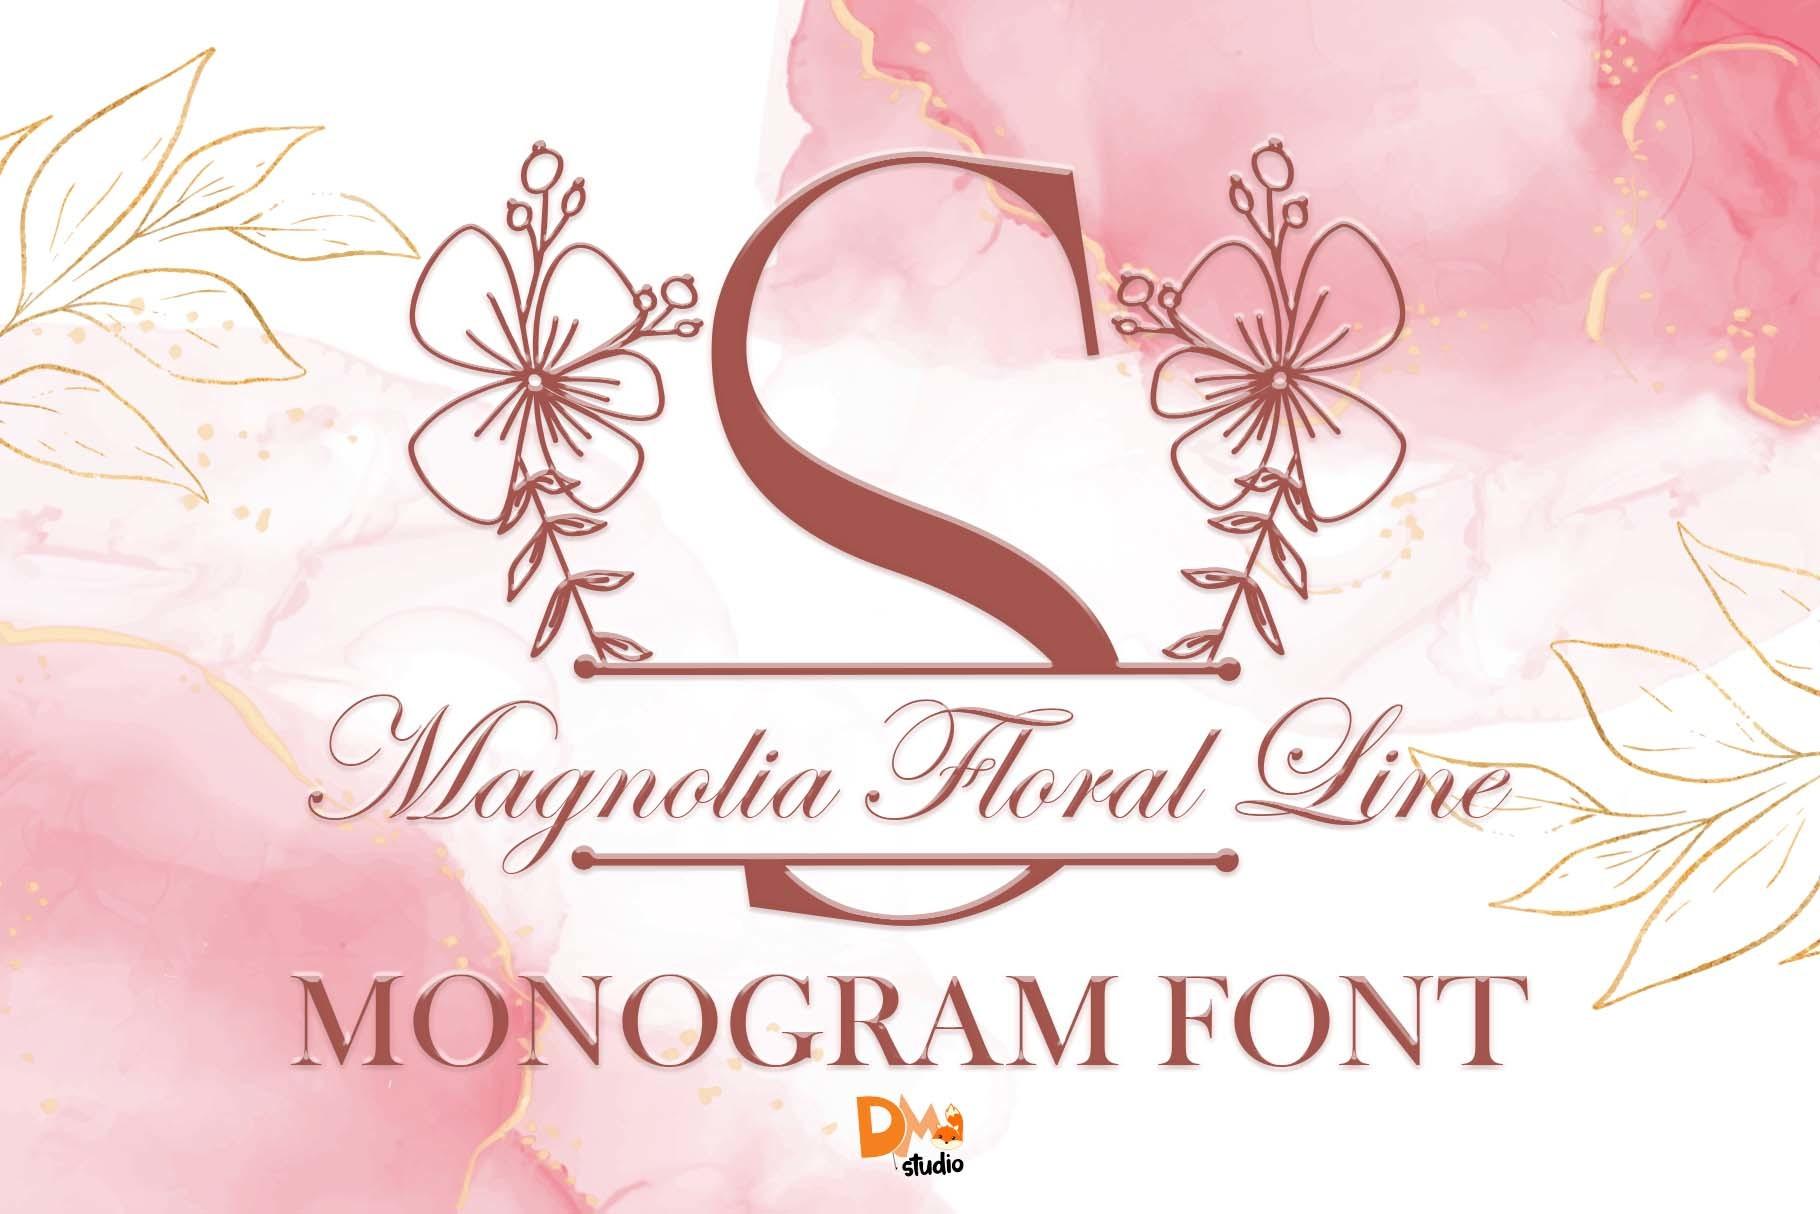 Magnolia Floral Line Monogram Font